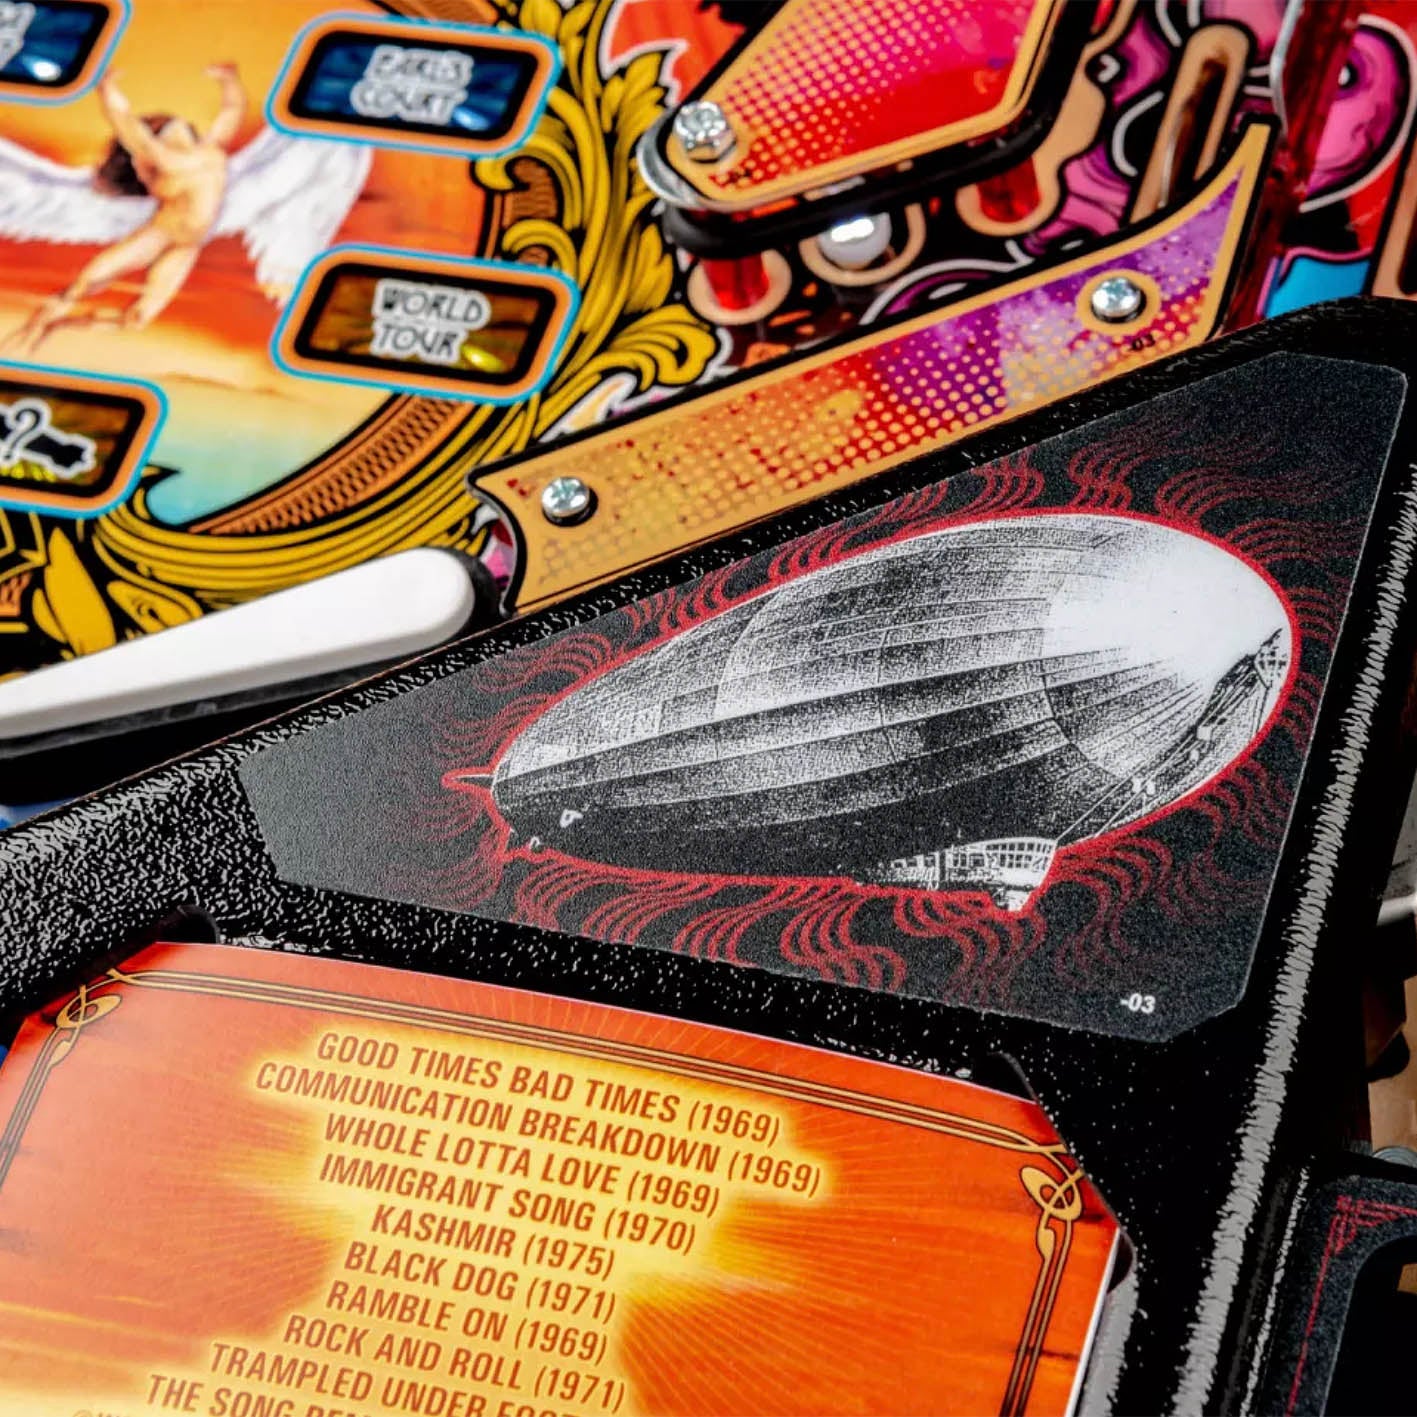 2020 Led Zeppelin Pro Pinball Machine by Stern